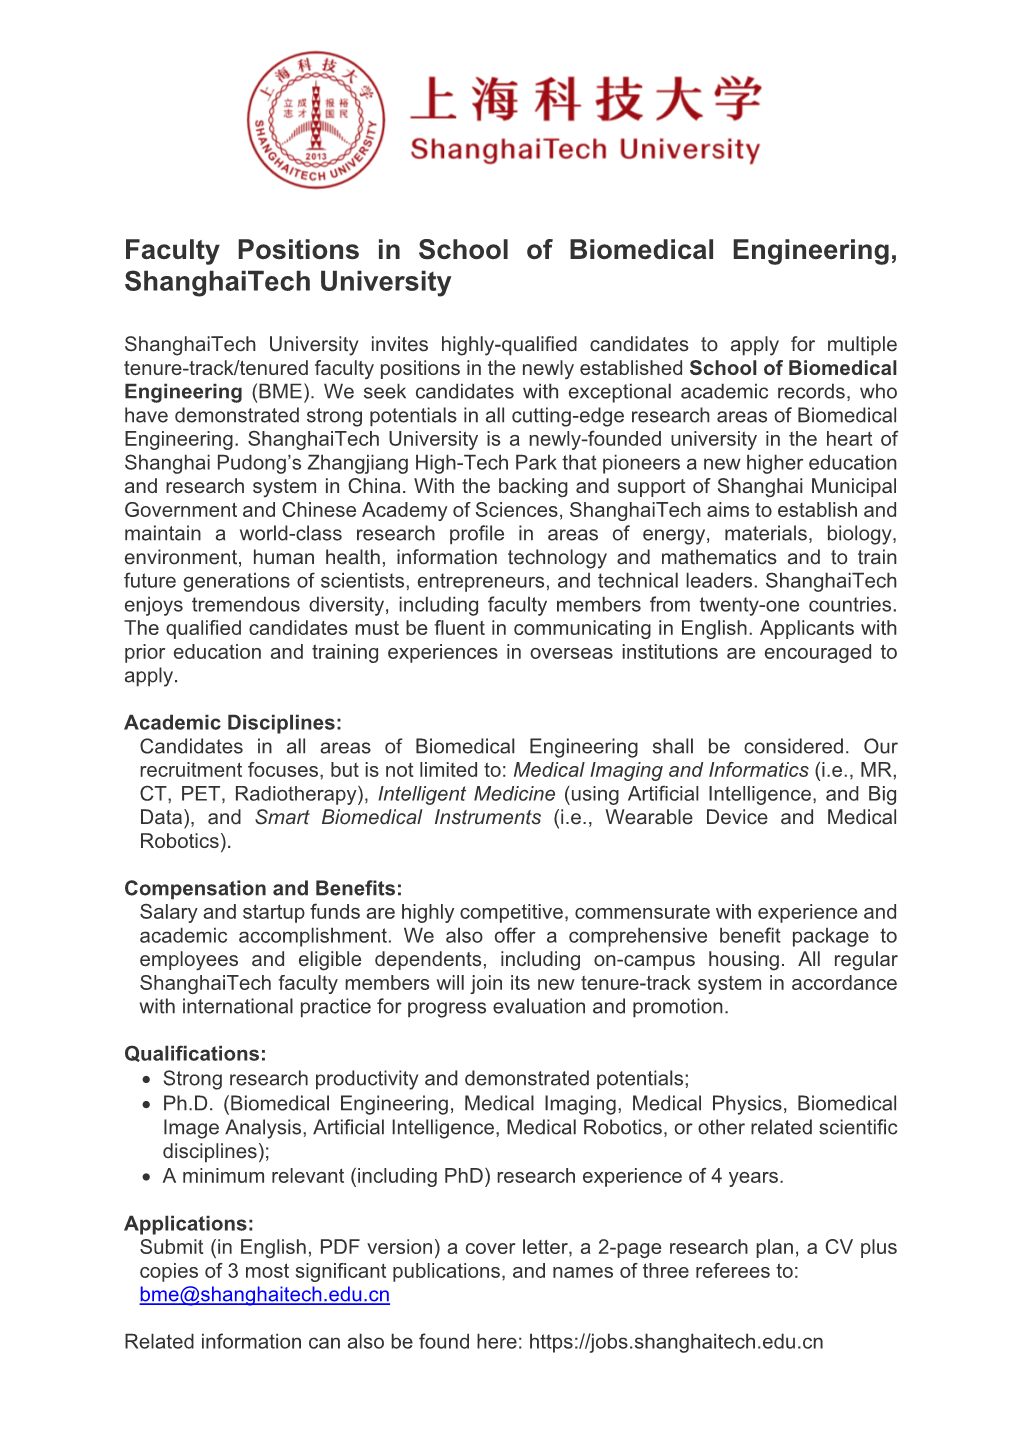 Faculty Positions in School of Biomedical Engineering, Shanghaitech University